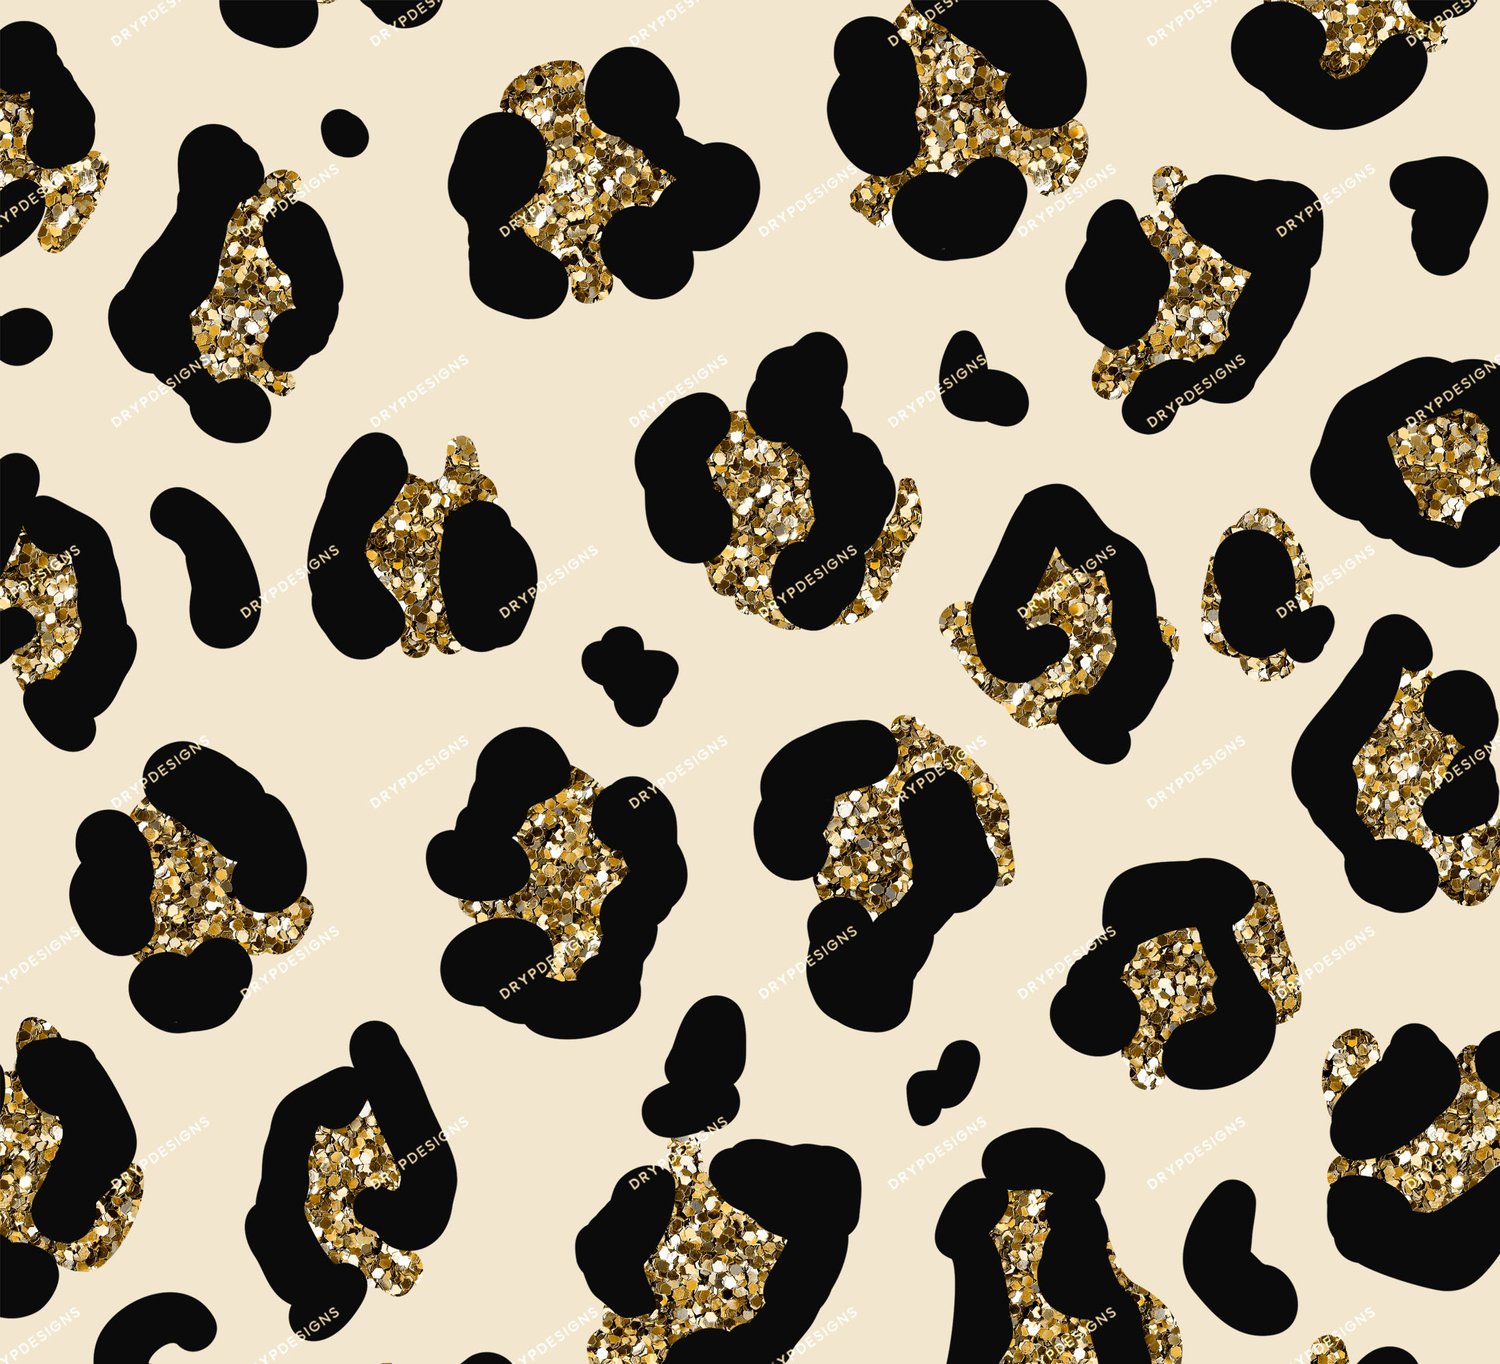 Cheetah Fabric, Wallpaper and Home Decor